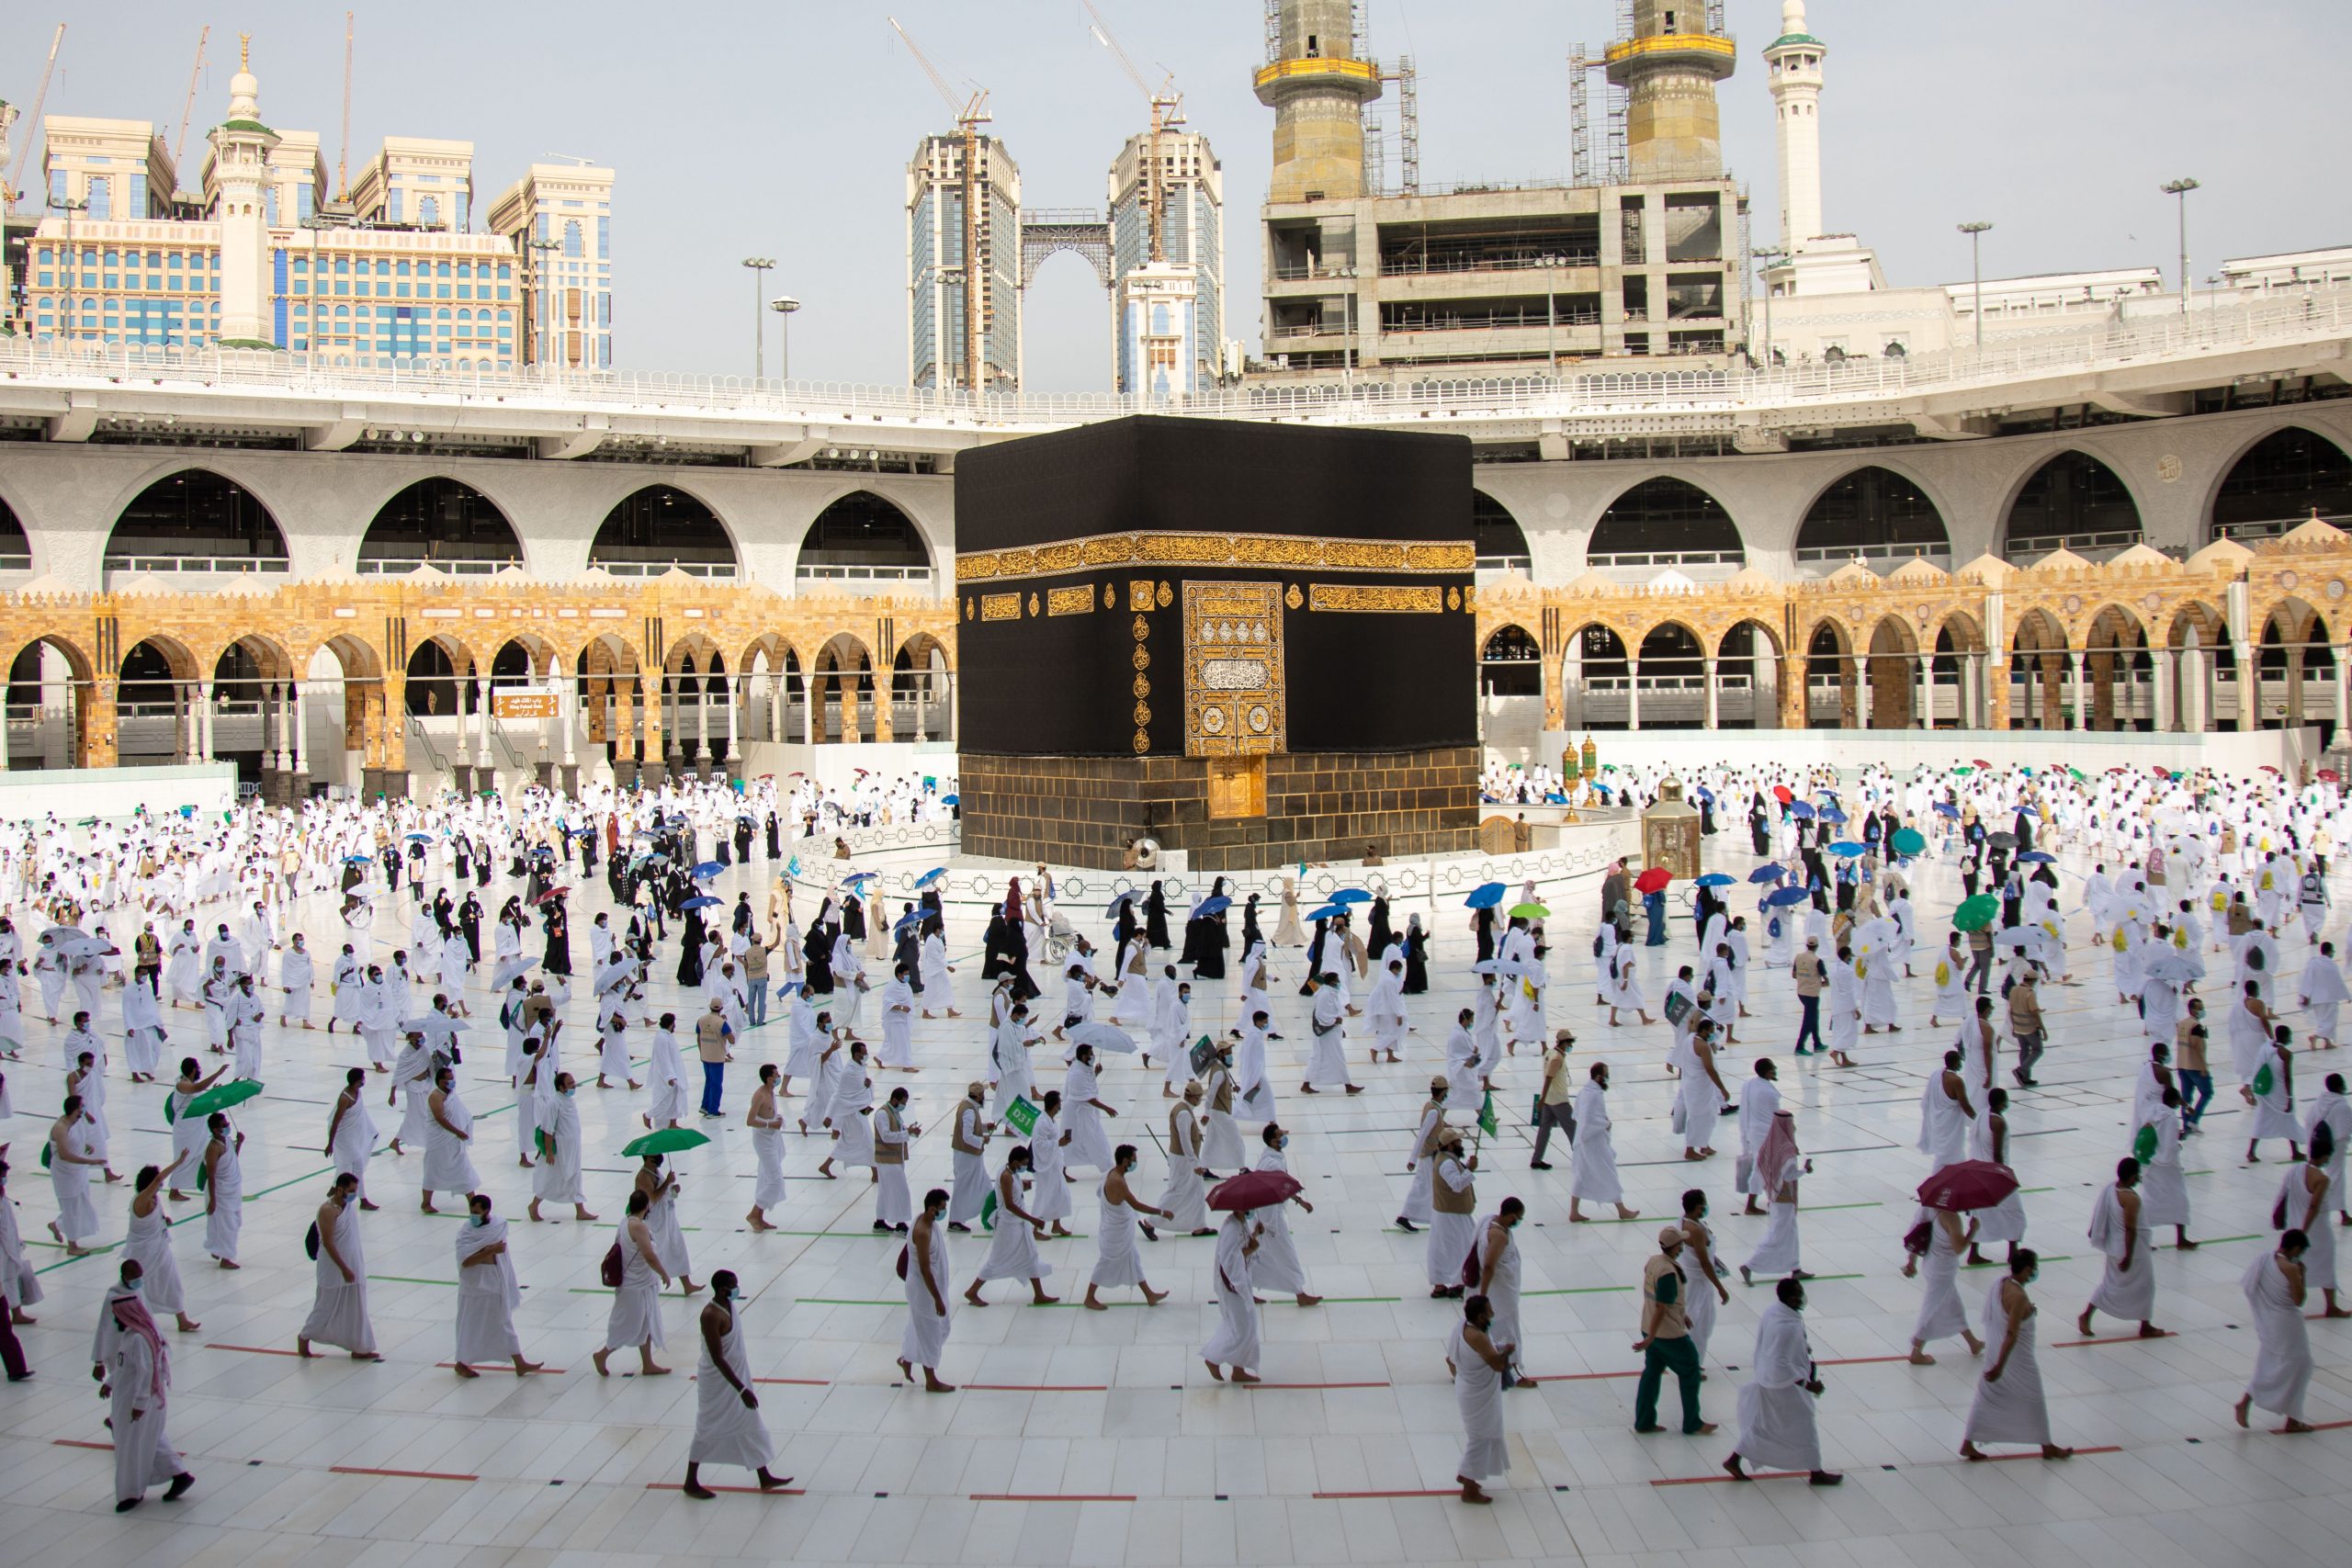 Haji1442 – Hajj pilgrims must be vaccinated against COVID-19